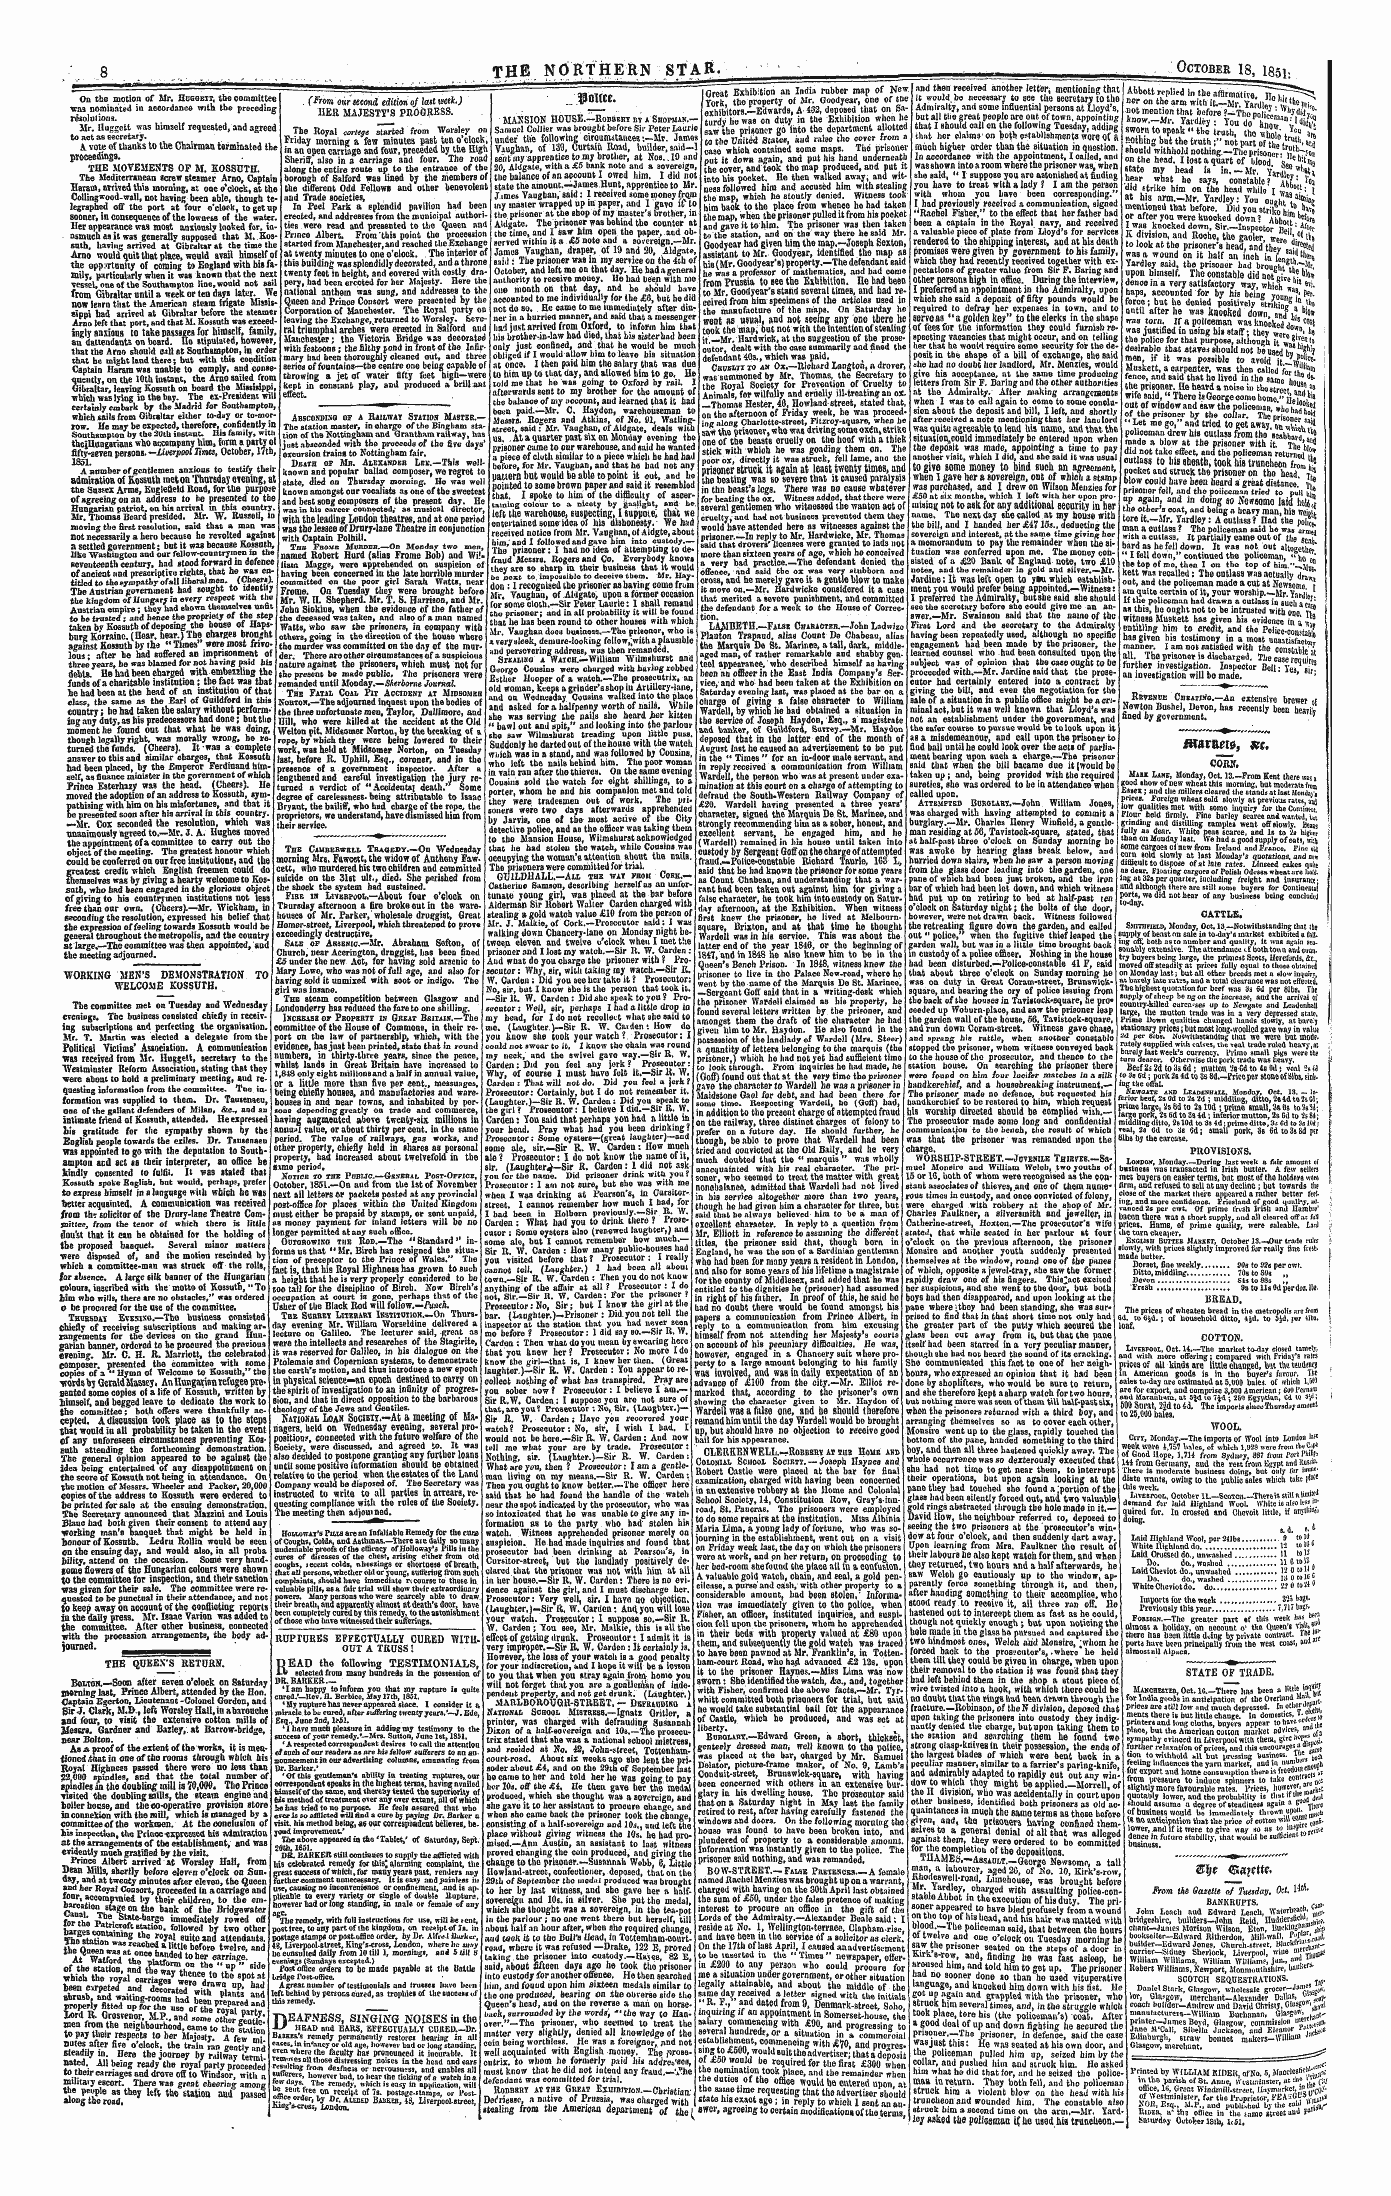 Northern Star (1837-1852): jS F Y, 1st edition - Rnntea By Wik.Iam Kidbk. Ofno. 5 Macclcsne »- . I Printed By William Kideii. Of No. 5. Macclcsfif*^;